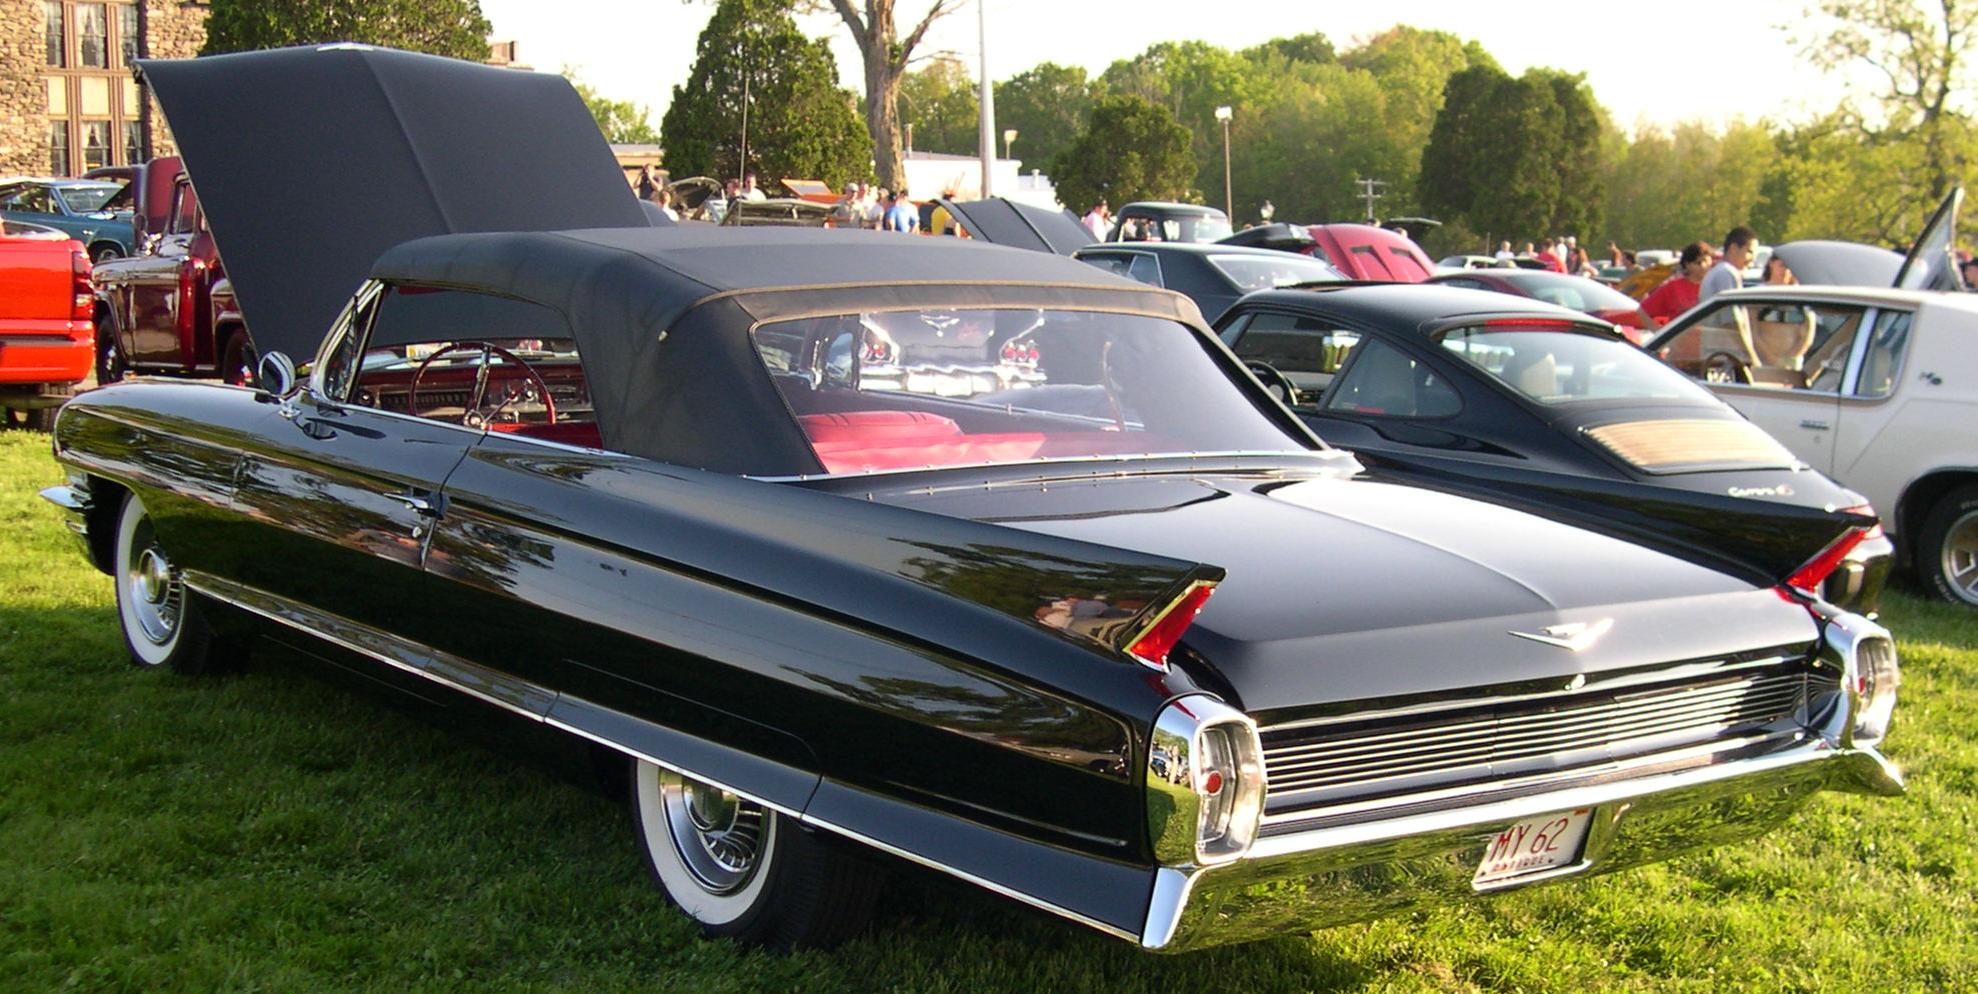 Cadillac 62